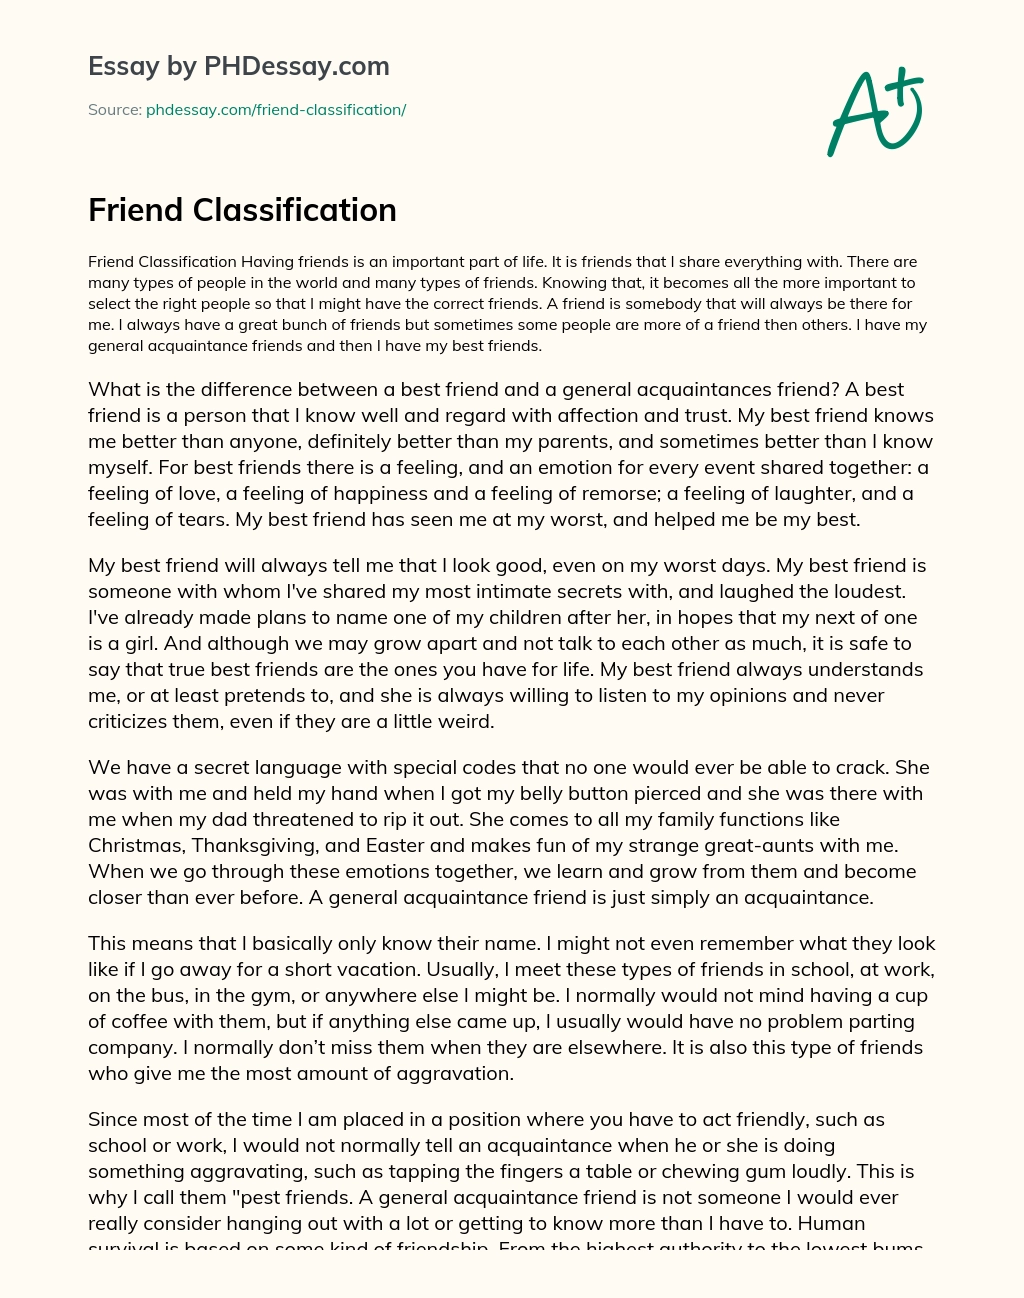 Friend Classification